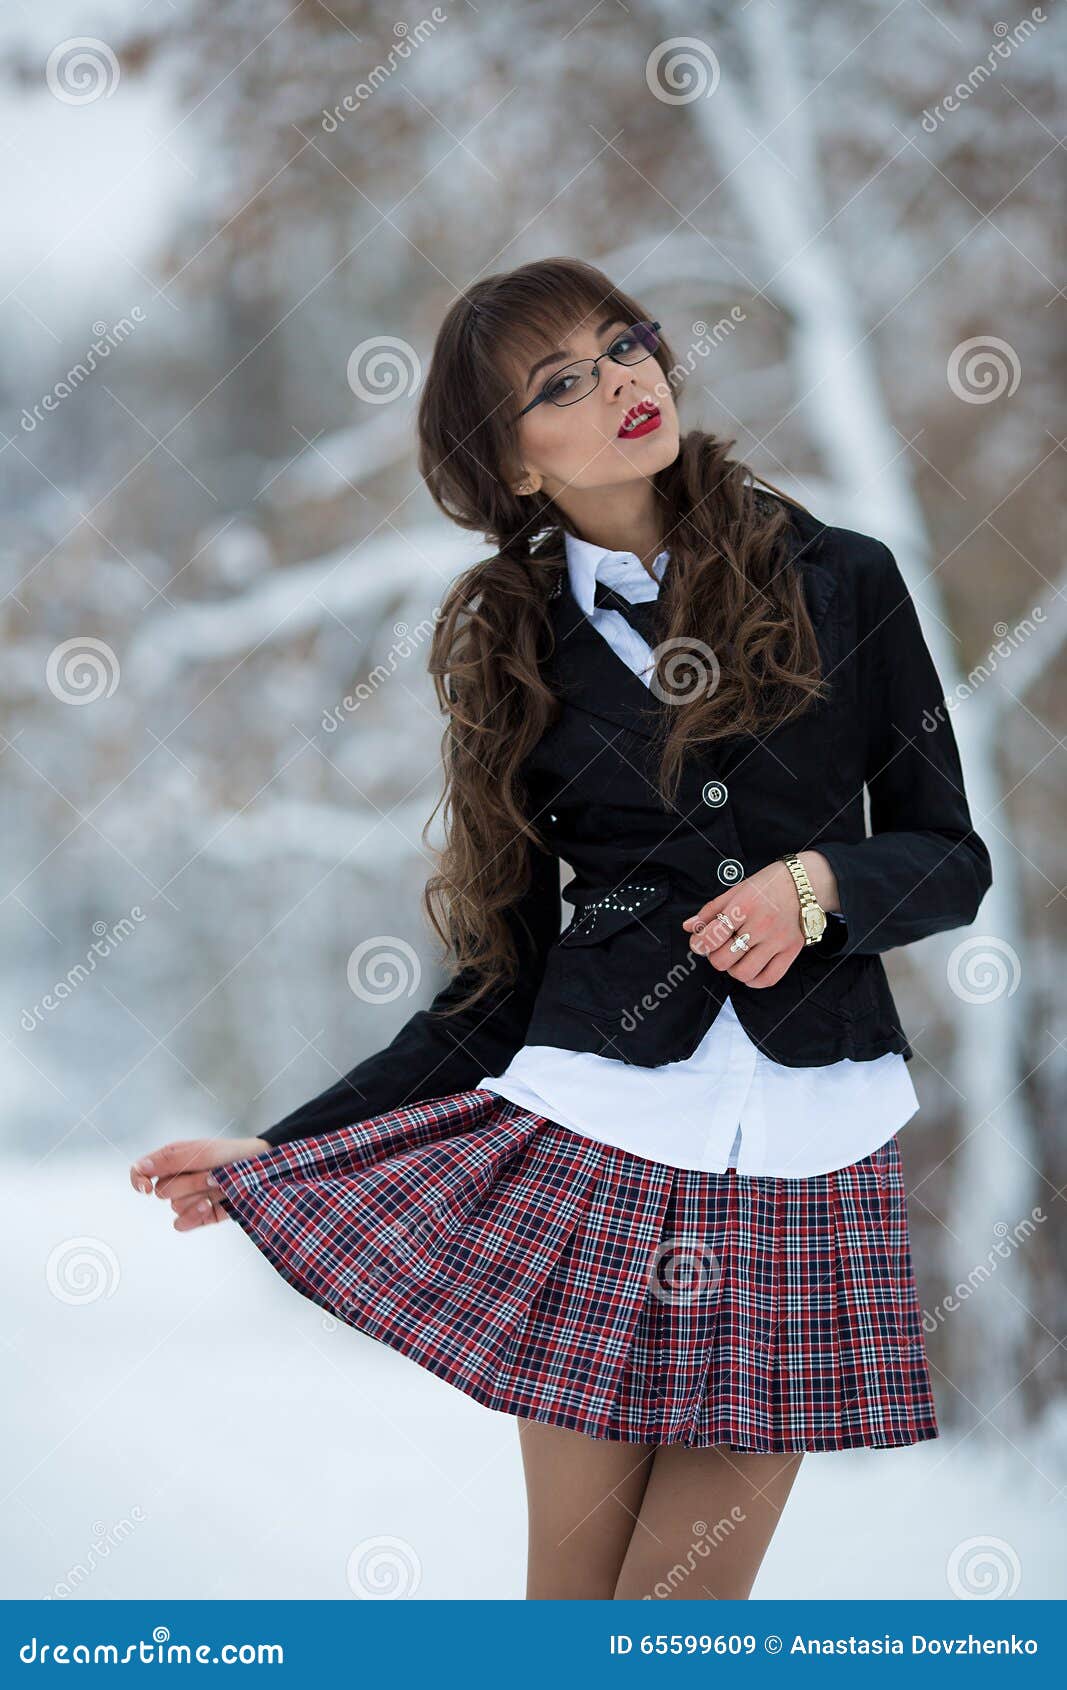 School Girl Sexy Image